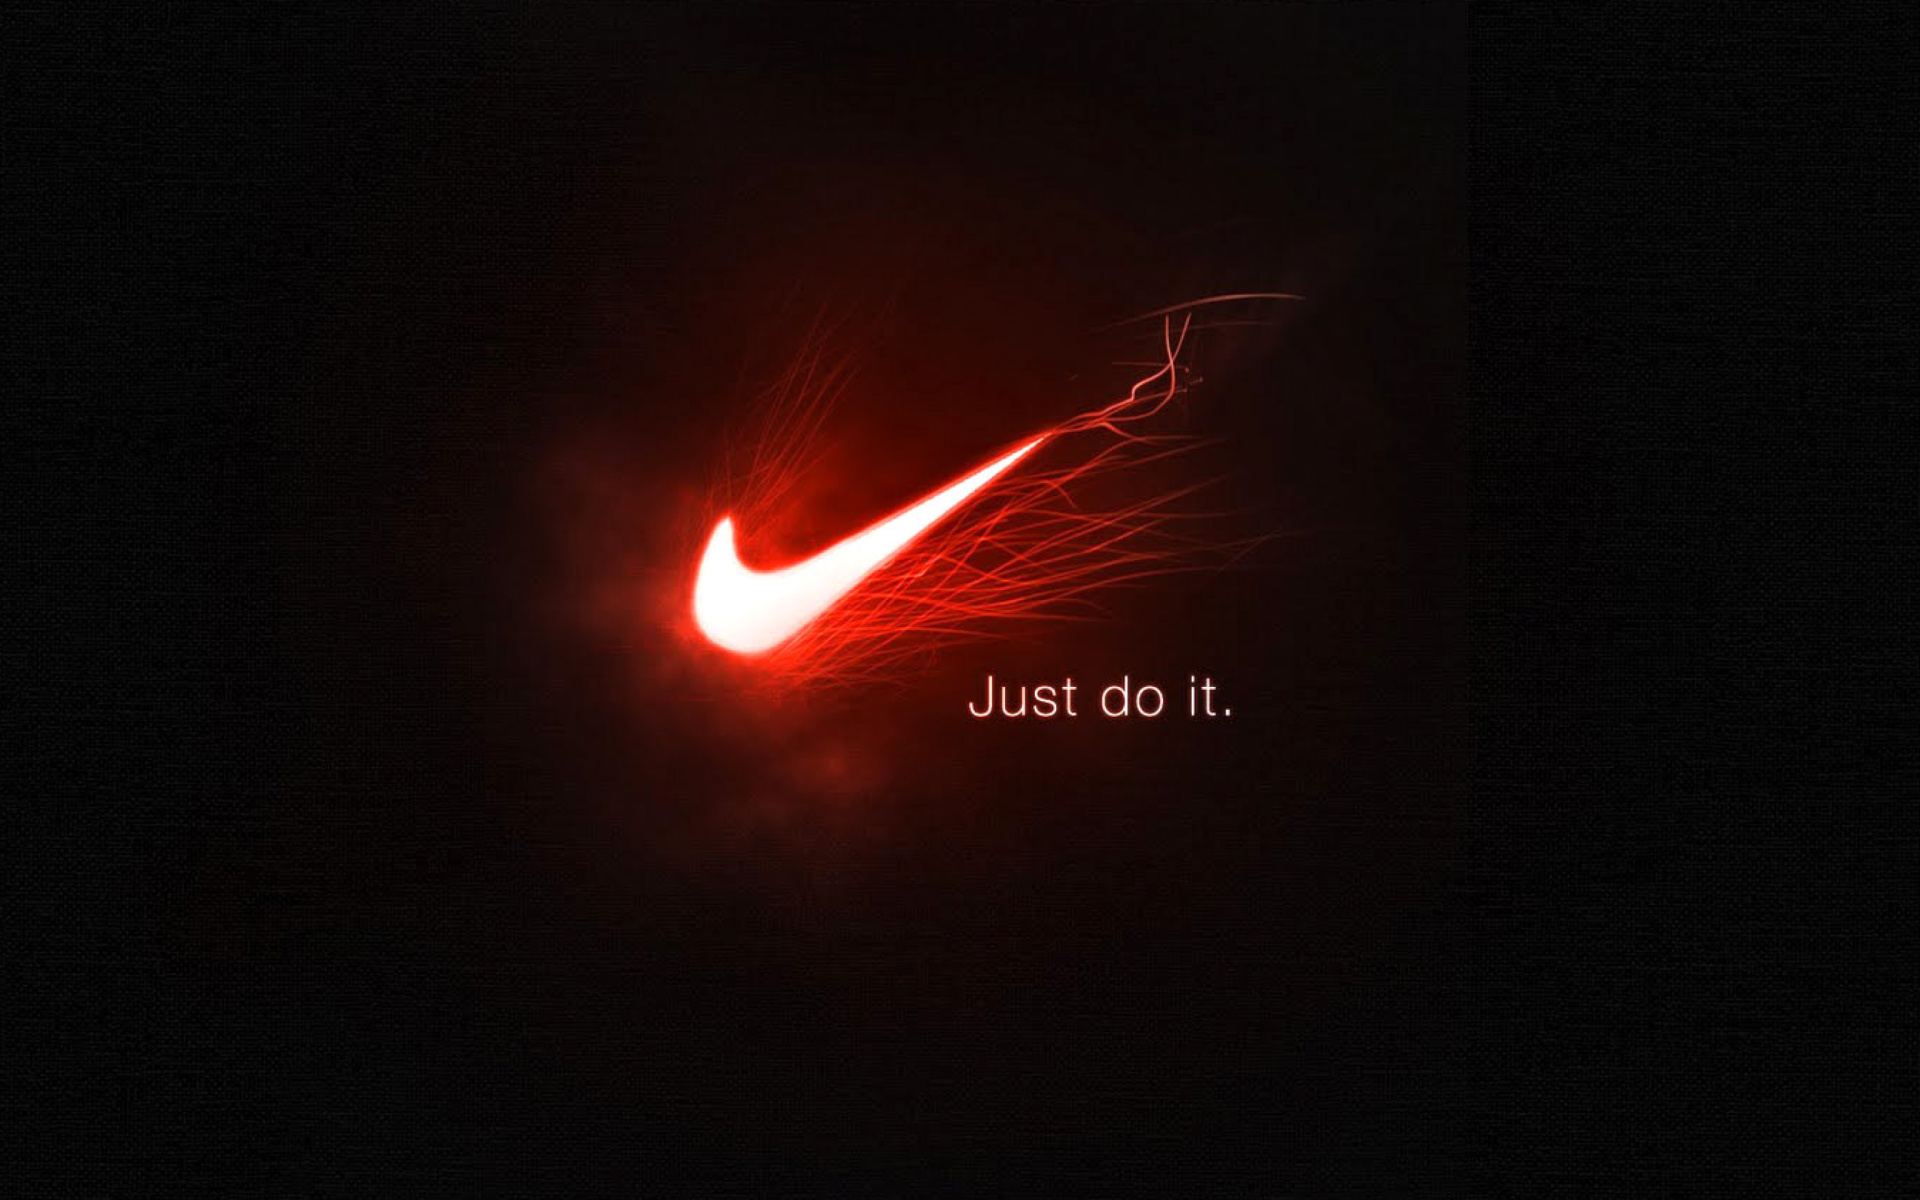 Обои Nike Advertising Slogan Just Do It 1920x1200